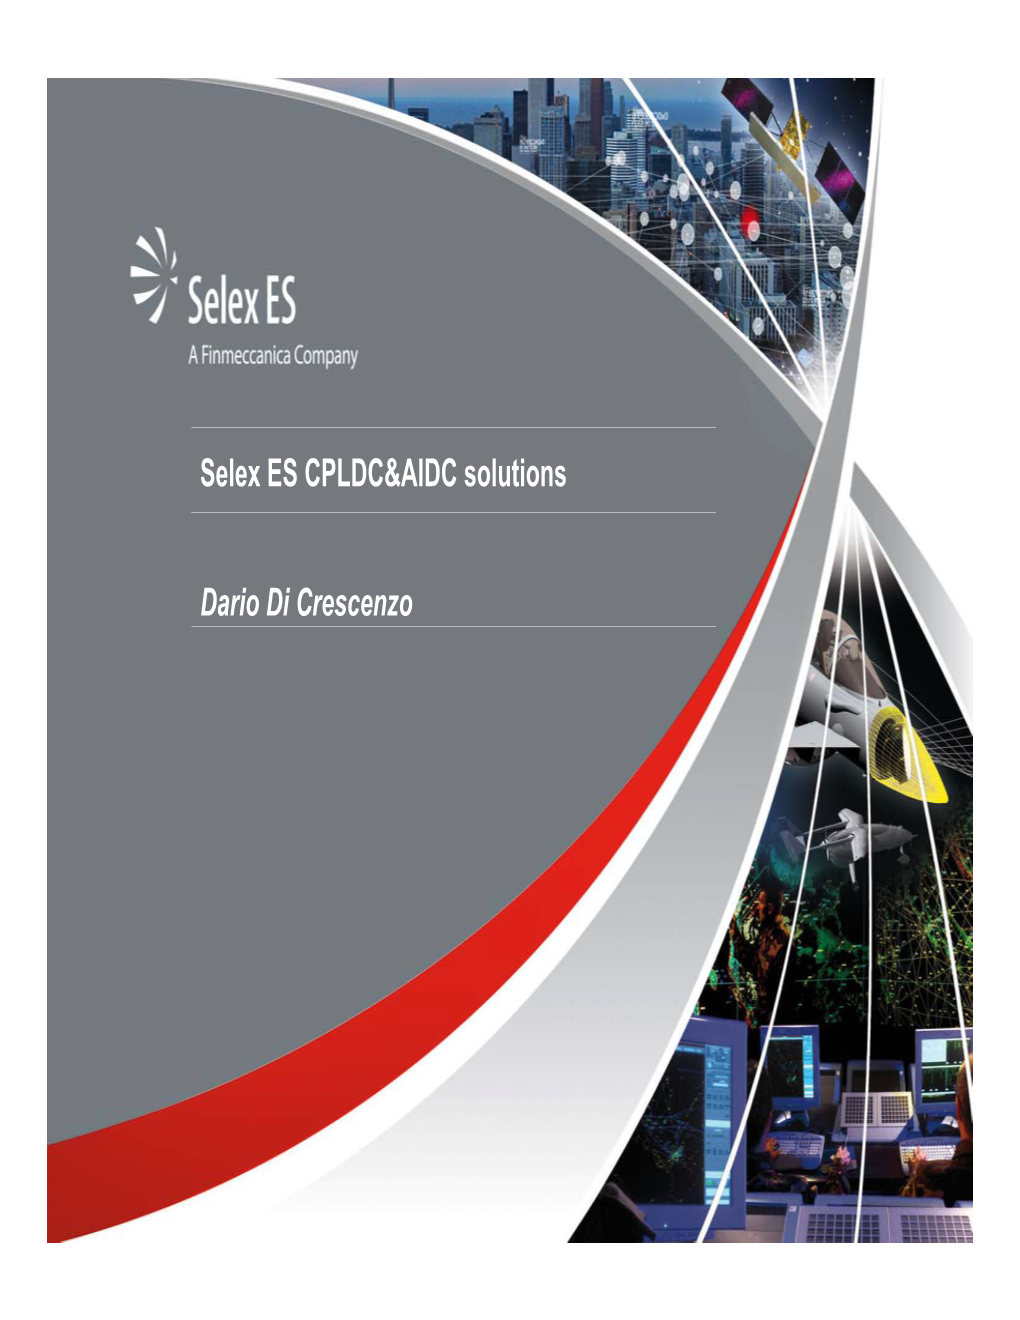 Selex ES CPLDC&AIDC Solutions Dario Di Crescenzo